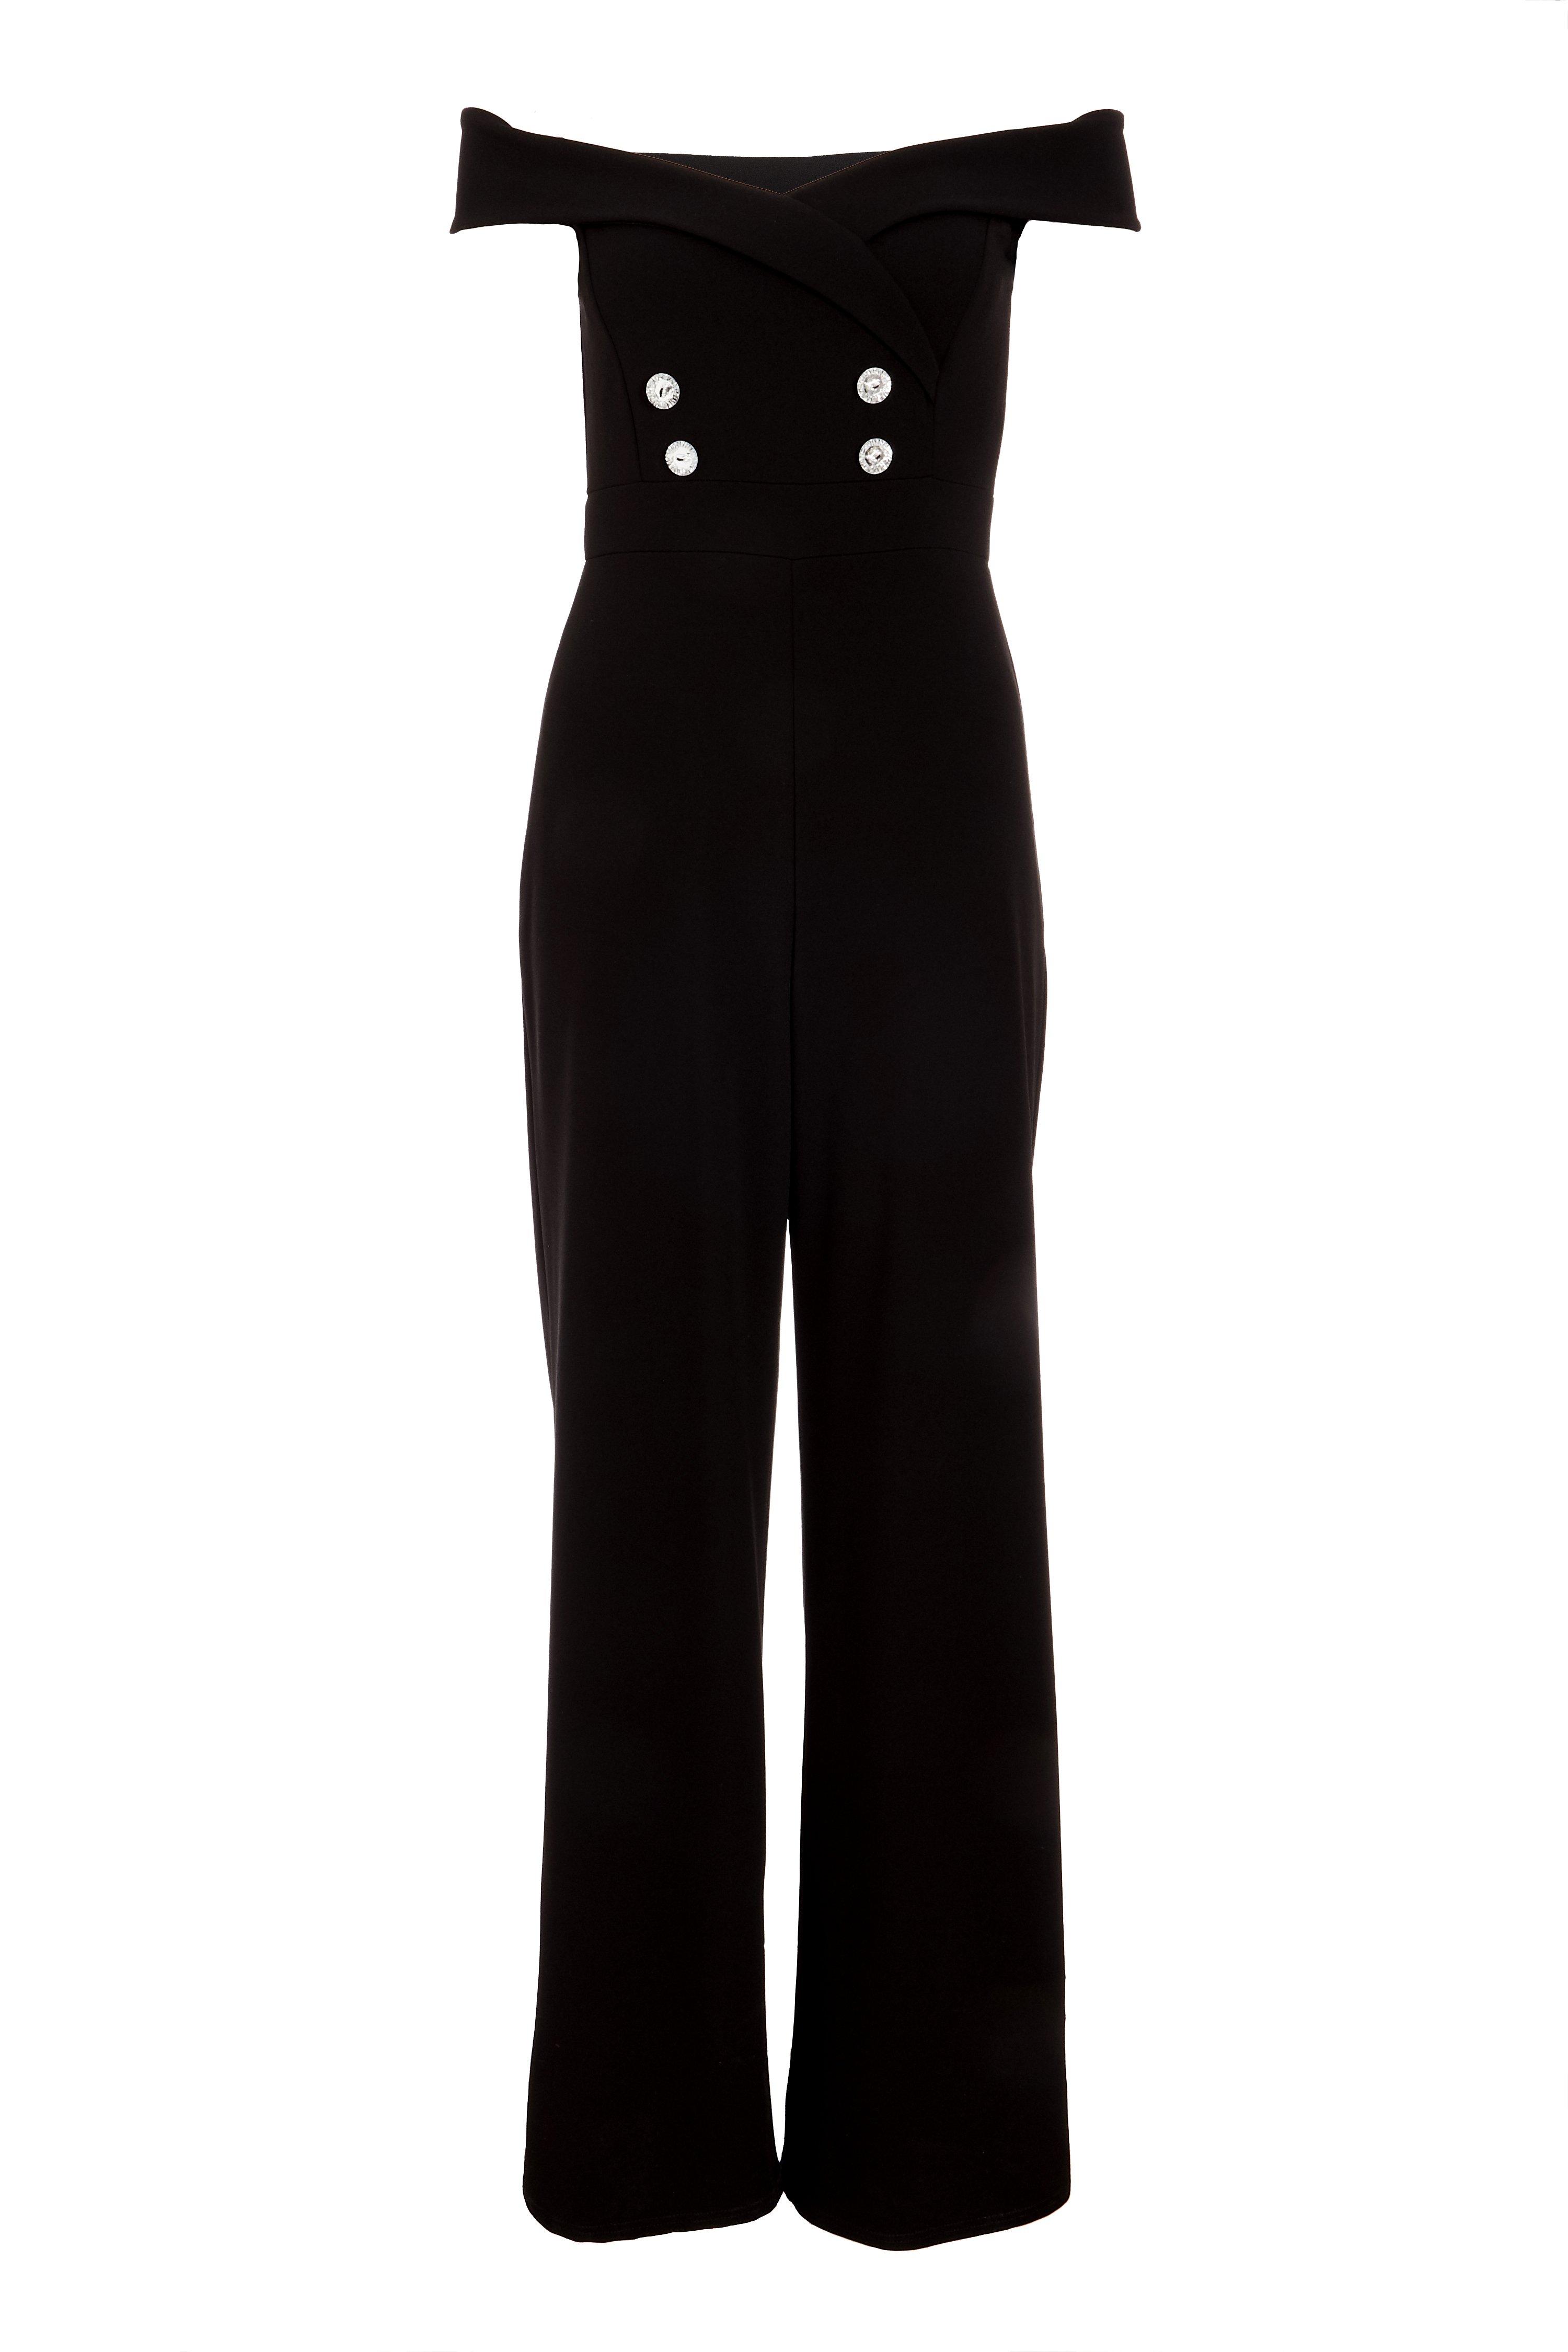 Black Bardot Jumpsuit - Quiz Clothing